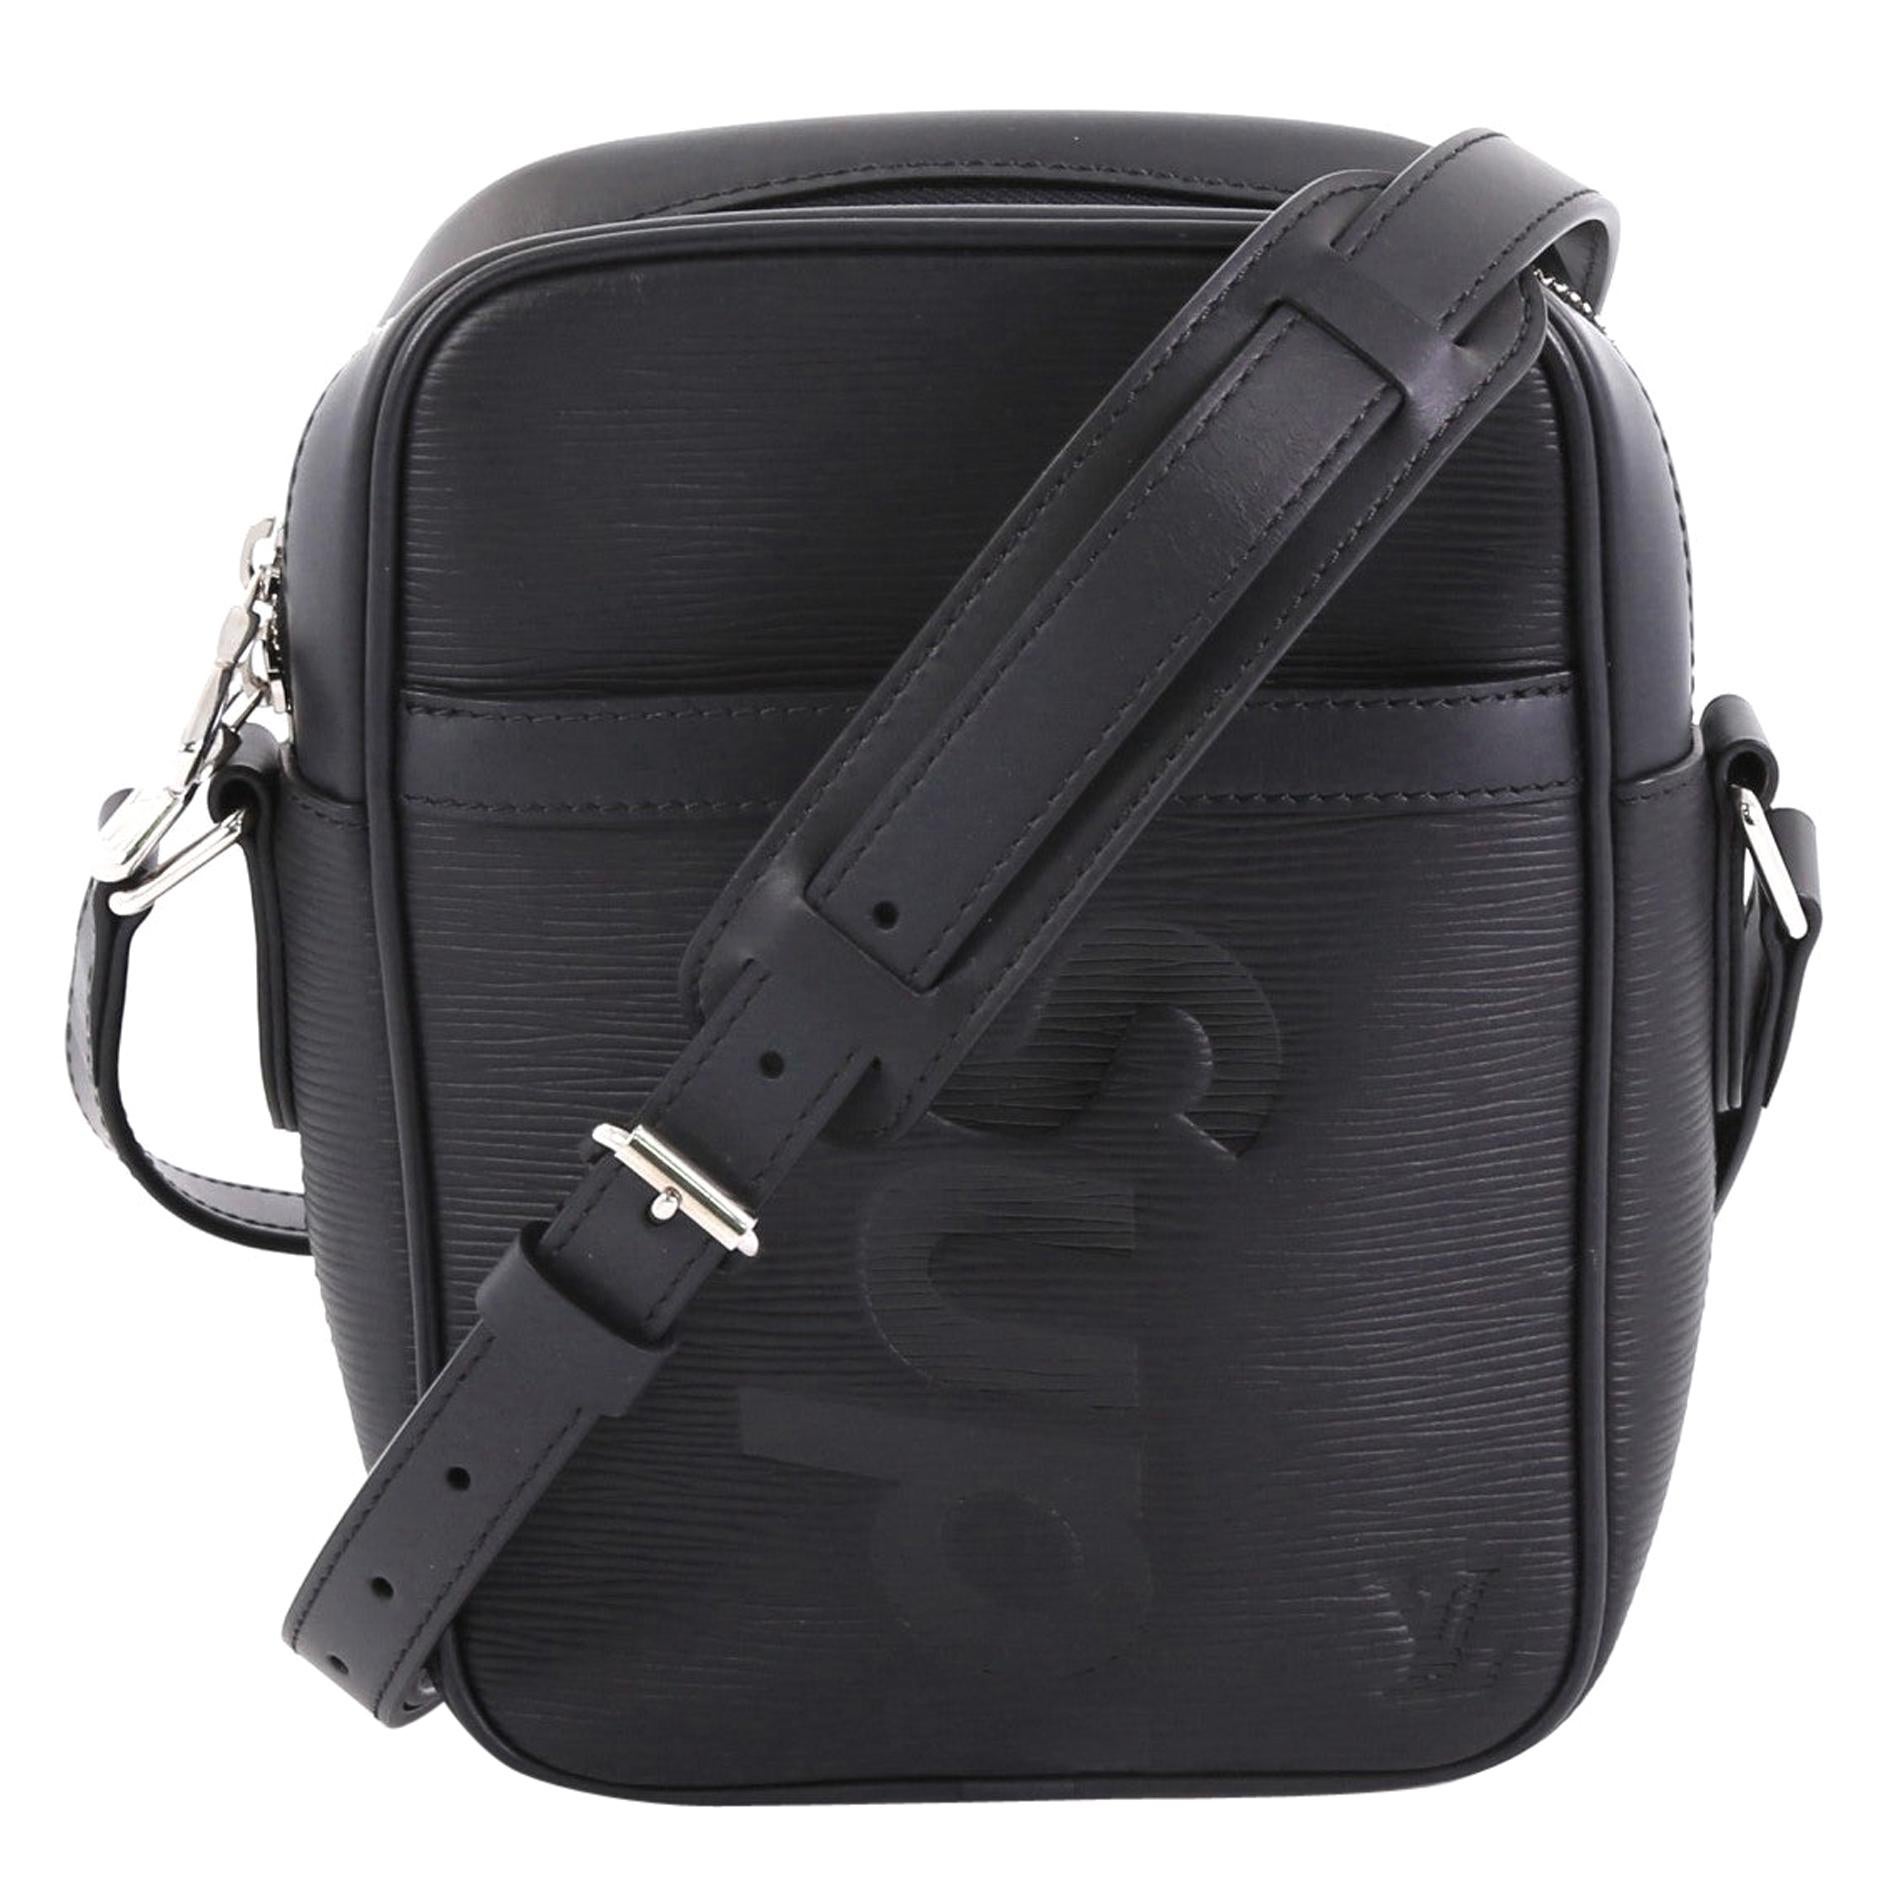 Louis Vuitton Danube Handbag Limited Edition Supreme Epi Leather PM